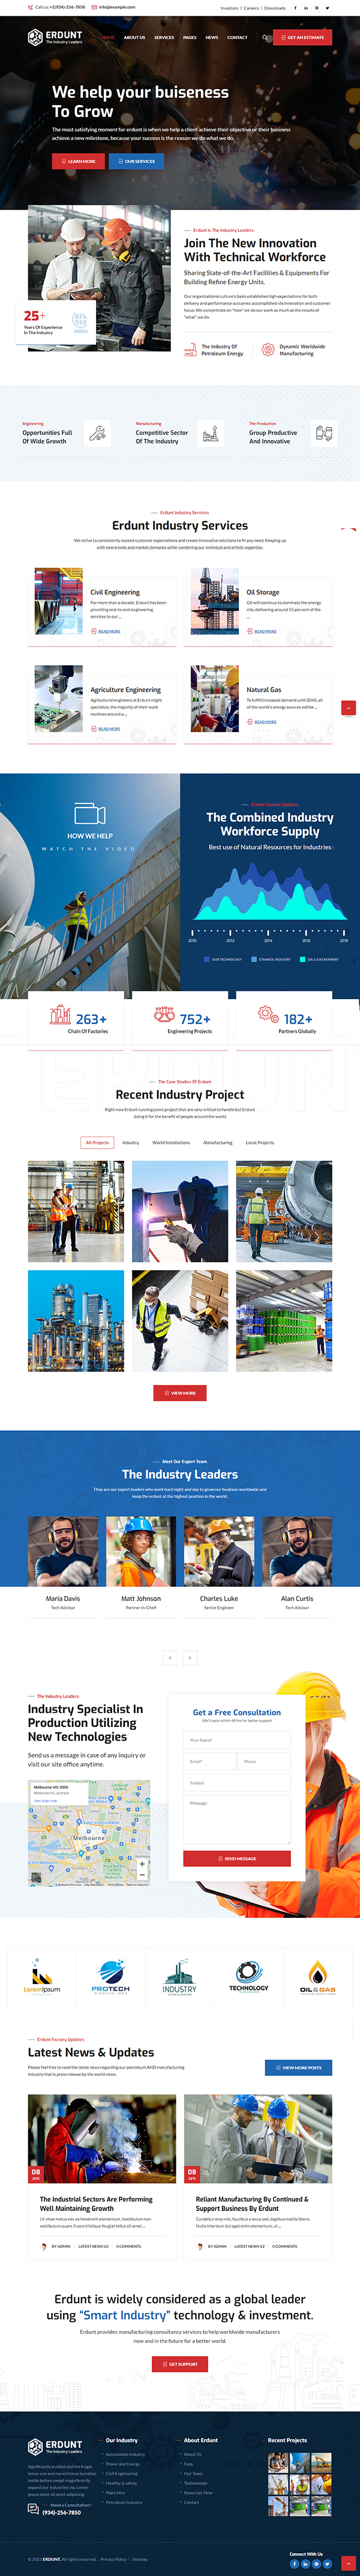 Erdunt - Industrial Business WordPress Theme